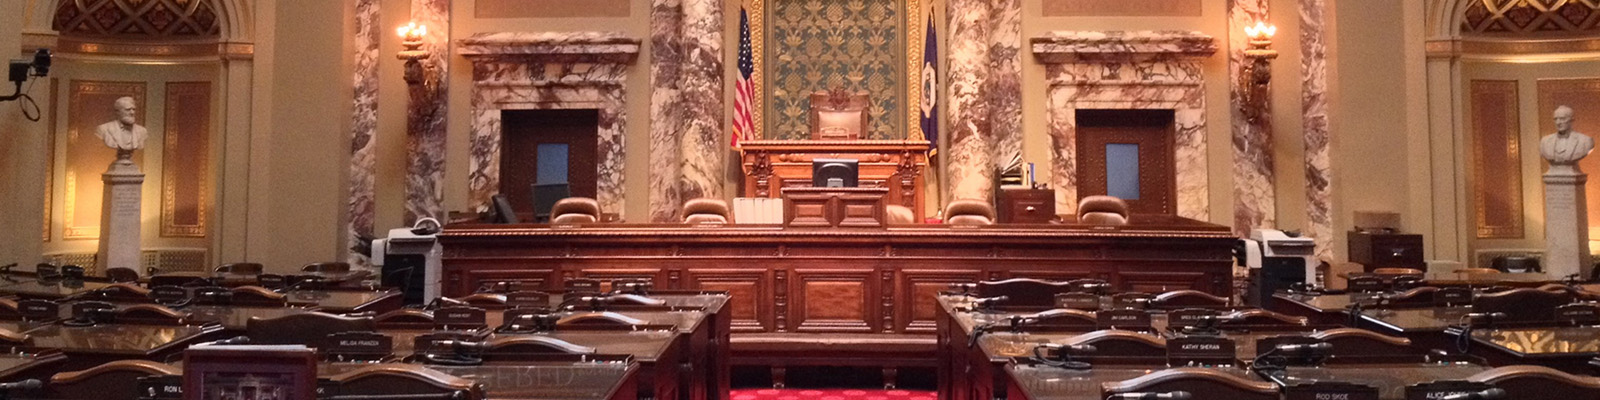 Legislative chamber at Minnesota Capitol